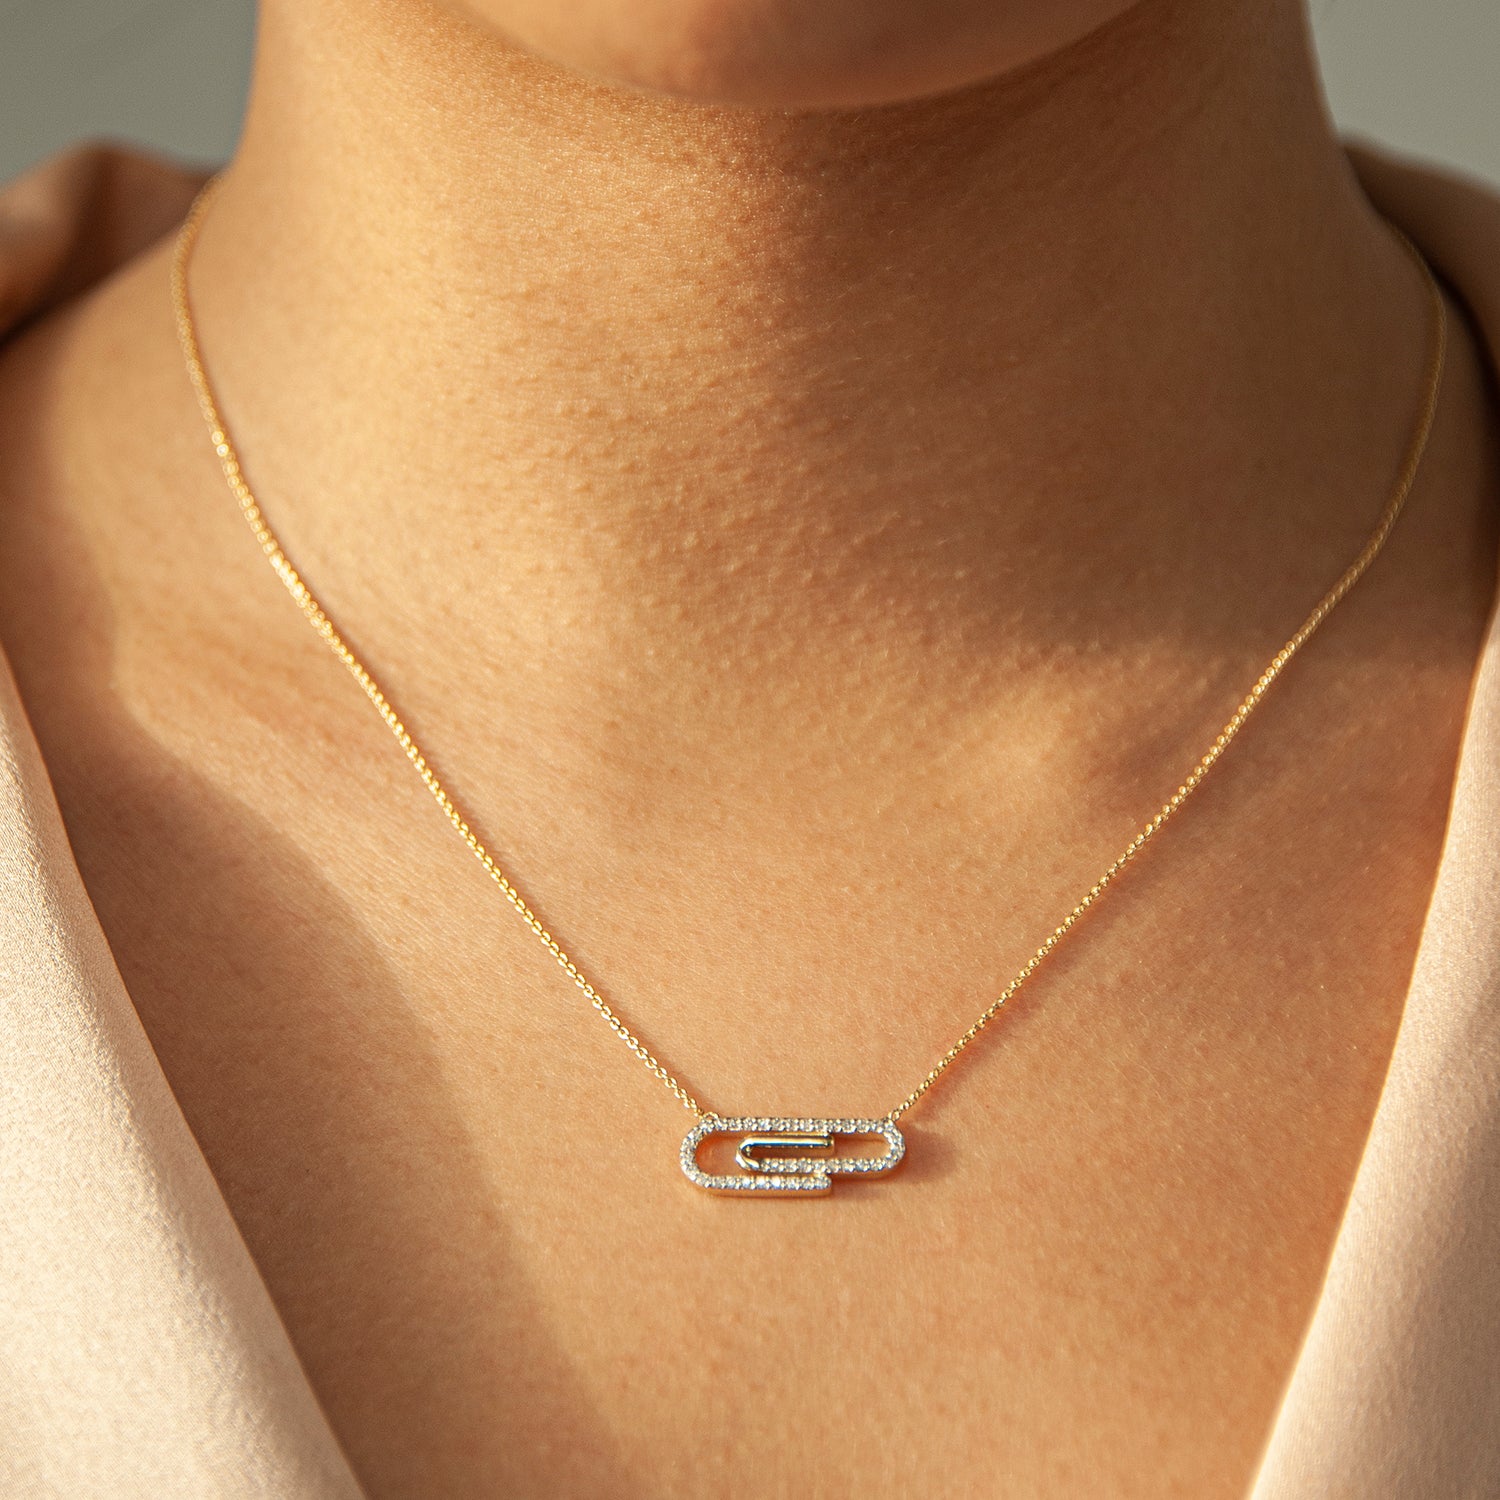 Pepita Diamond Paperclip Necklace for Neck